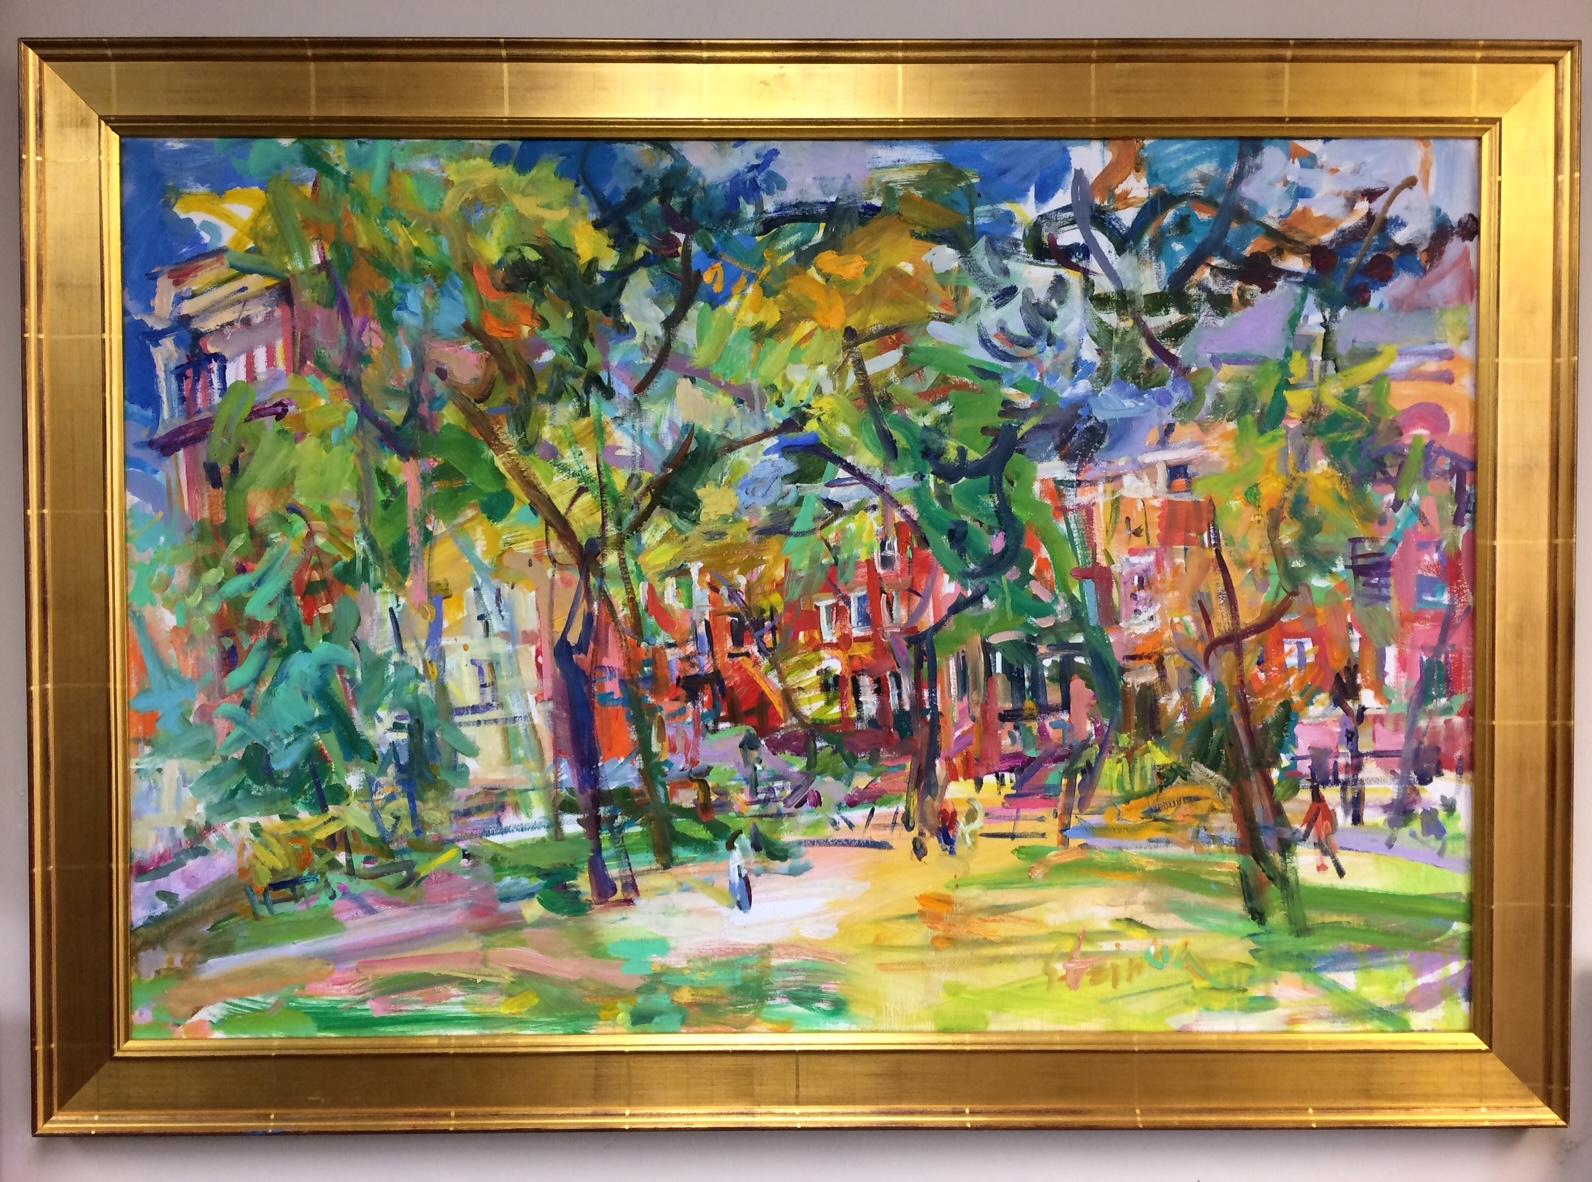 Sonia Grineva Landscape Painting - Washington Square Park, NYC original 32x48 post impressionist landscape